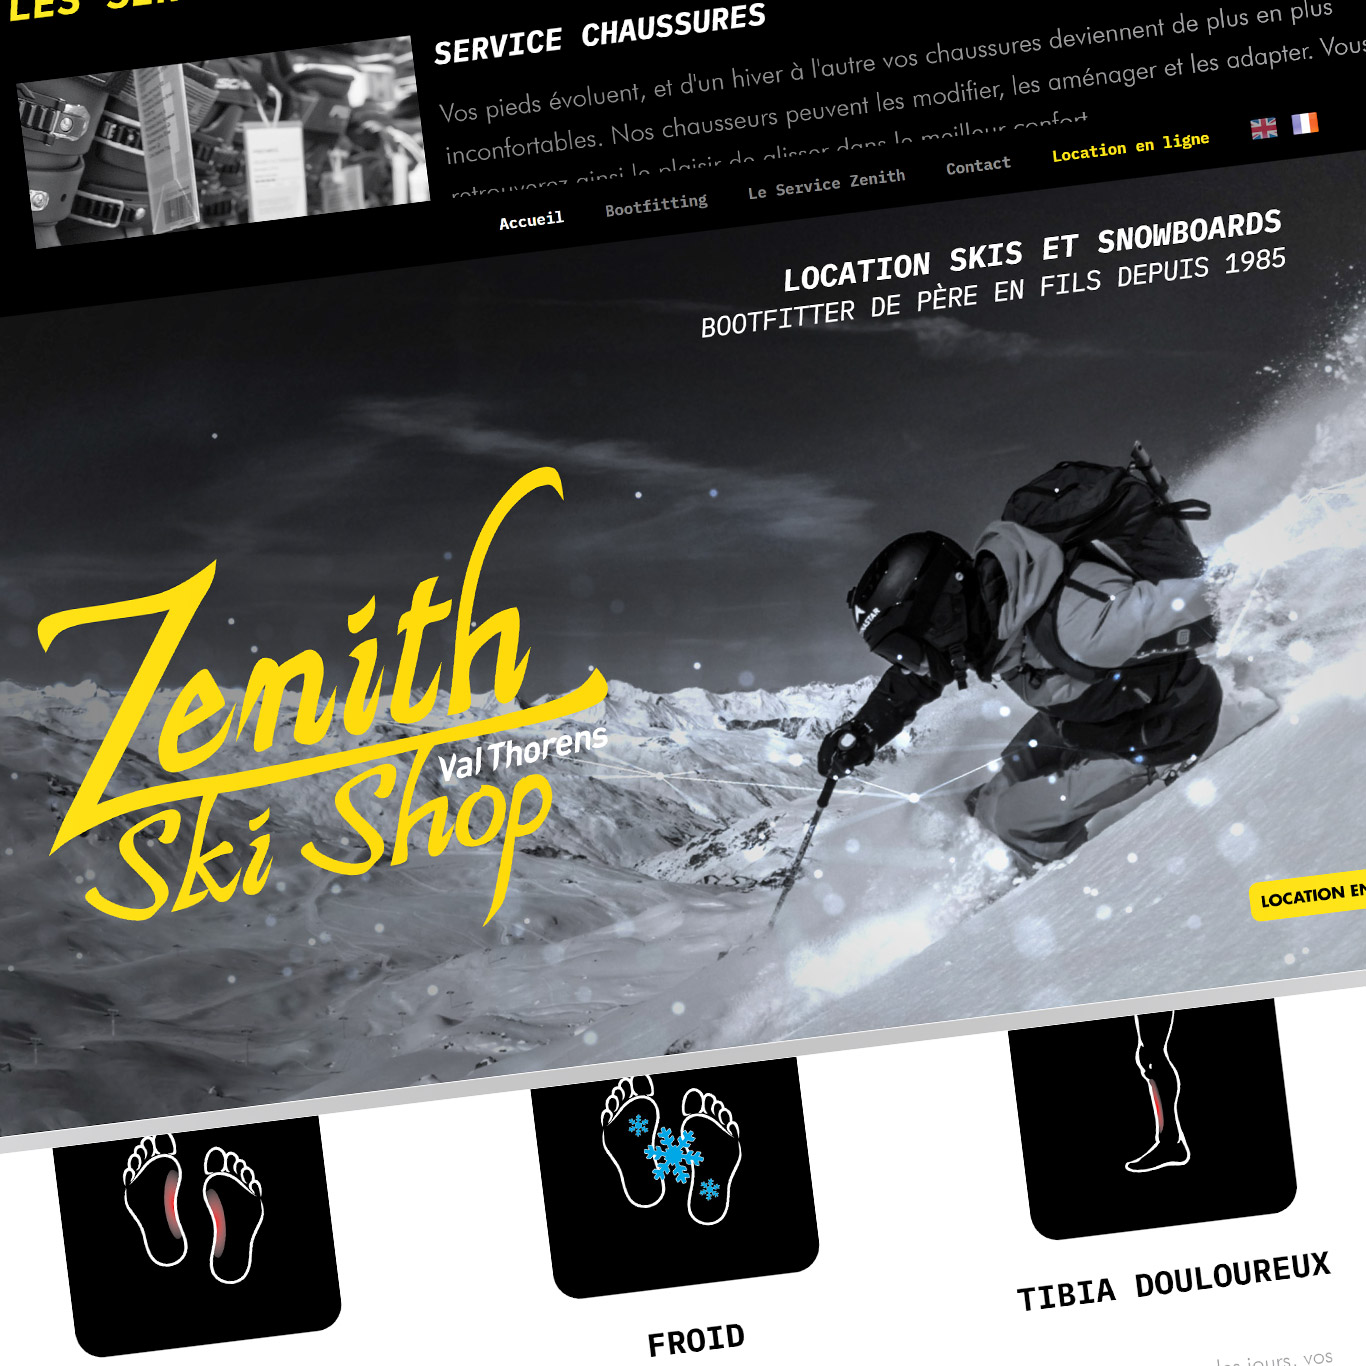 website Zenith Ski Shop